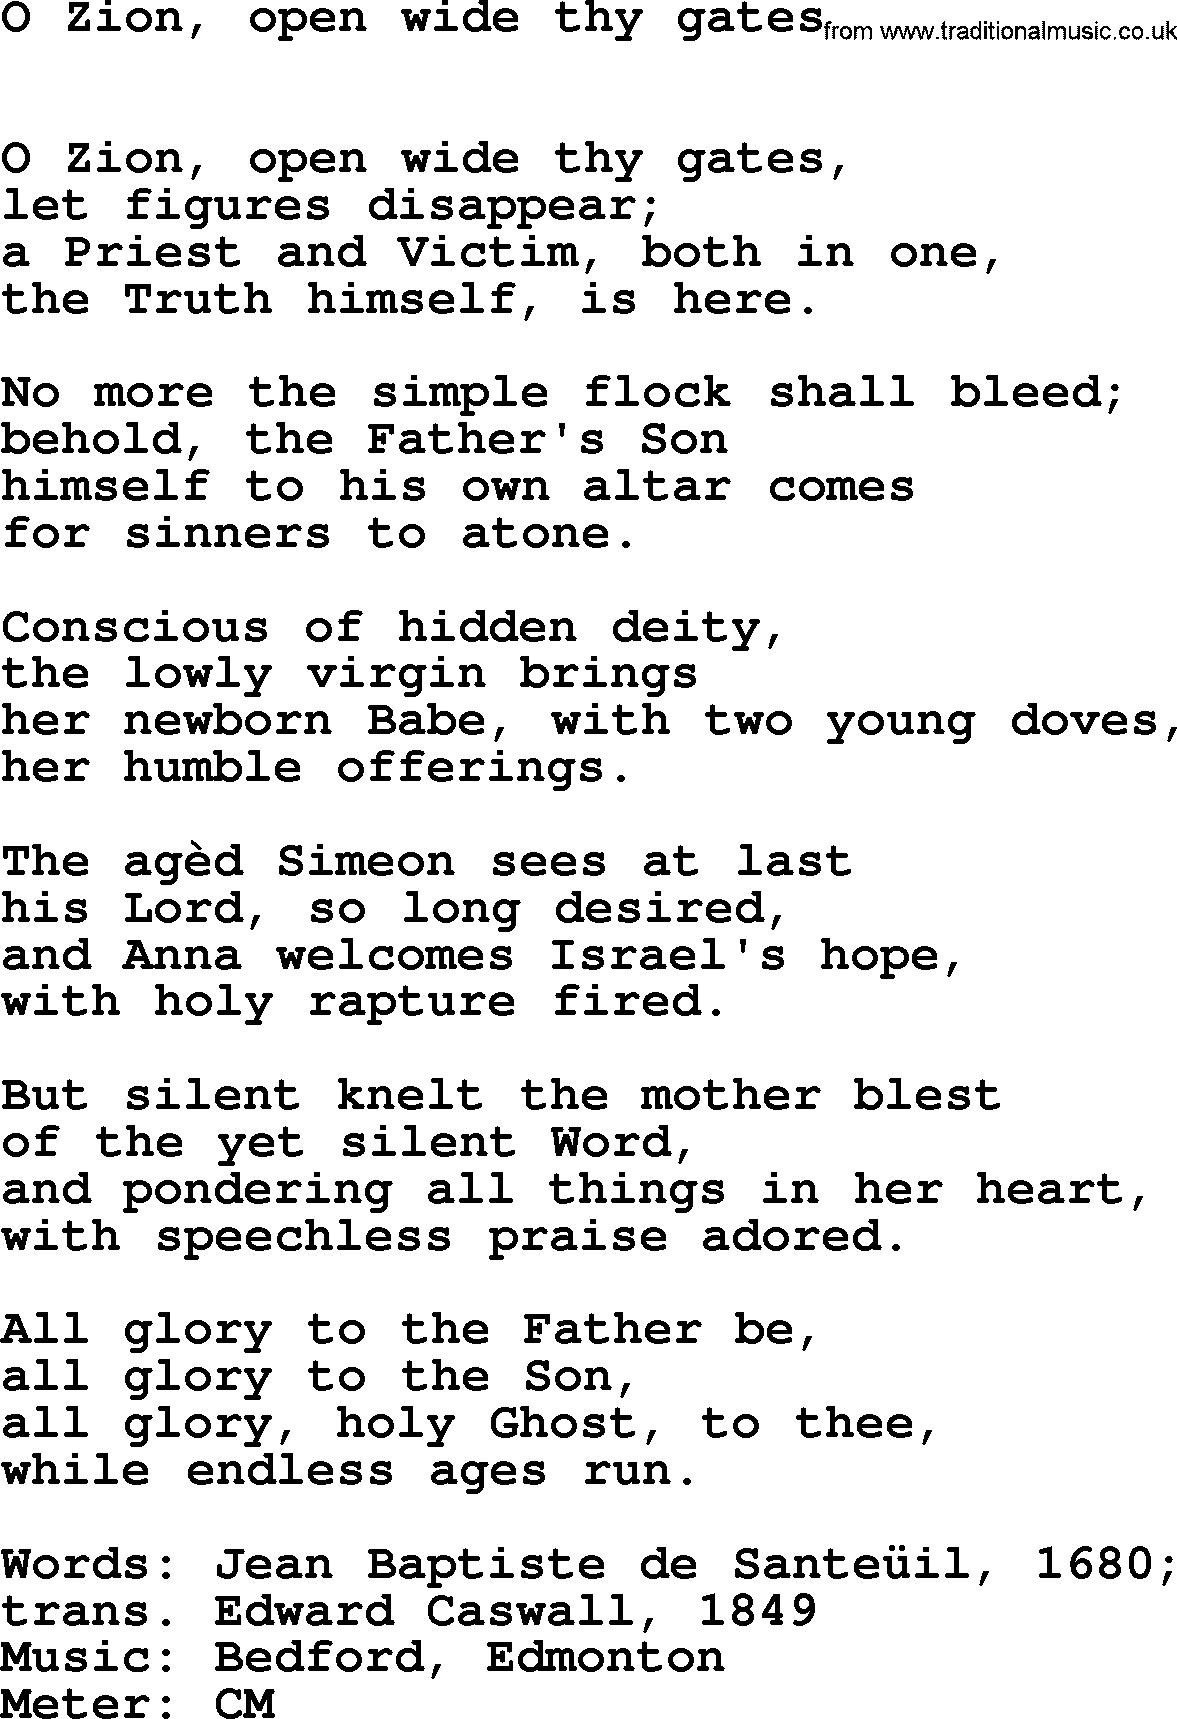 Book of Common Praise Hymn: O Zion, Open Wide Thy Gates.txt lyrics with midi music